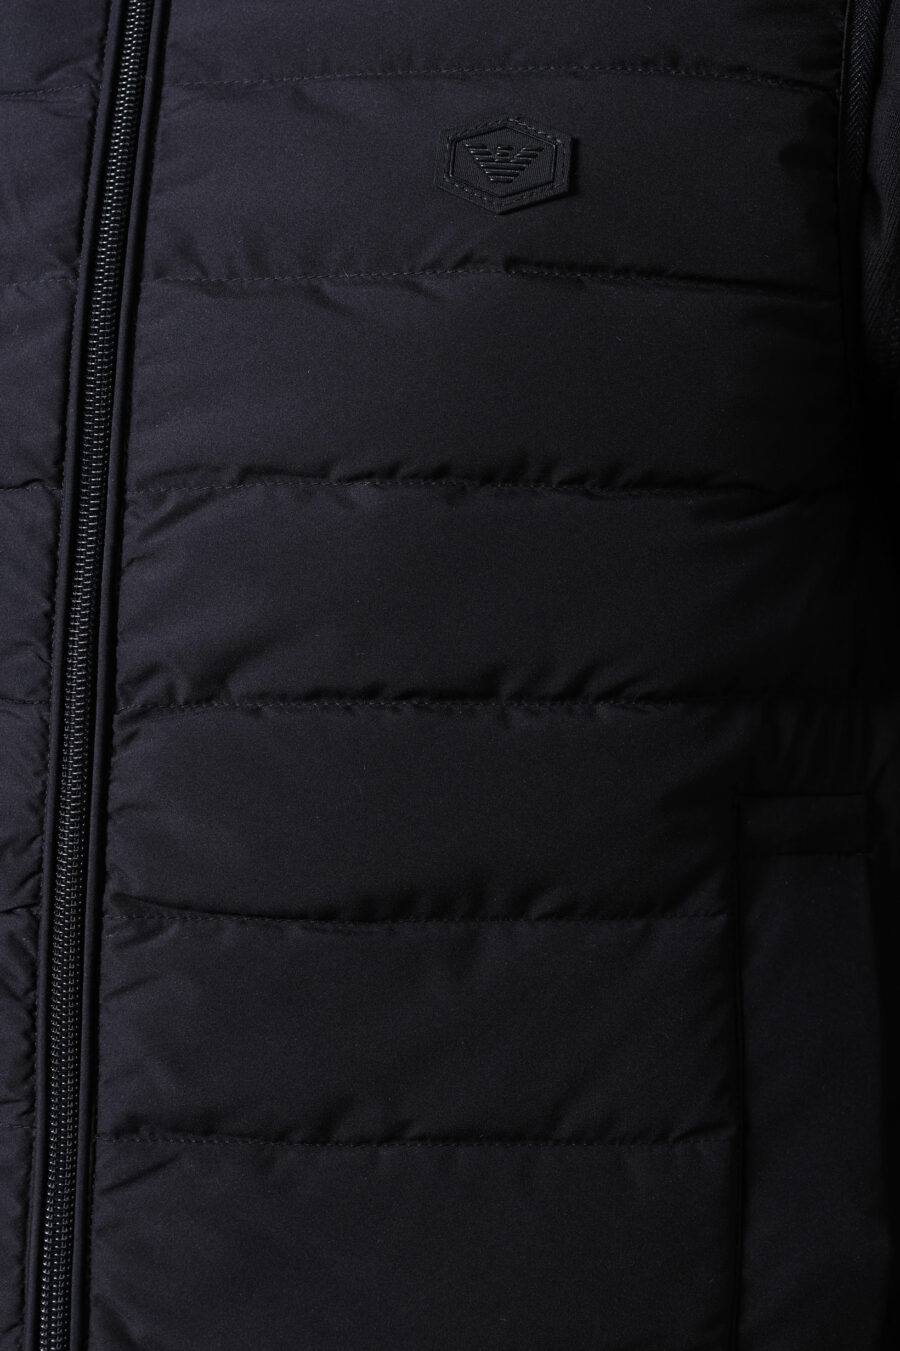 Gilet matelassé noir avec logo mini - Untitled Catalog 05457